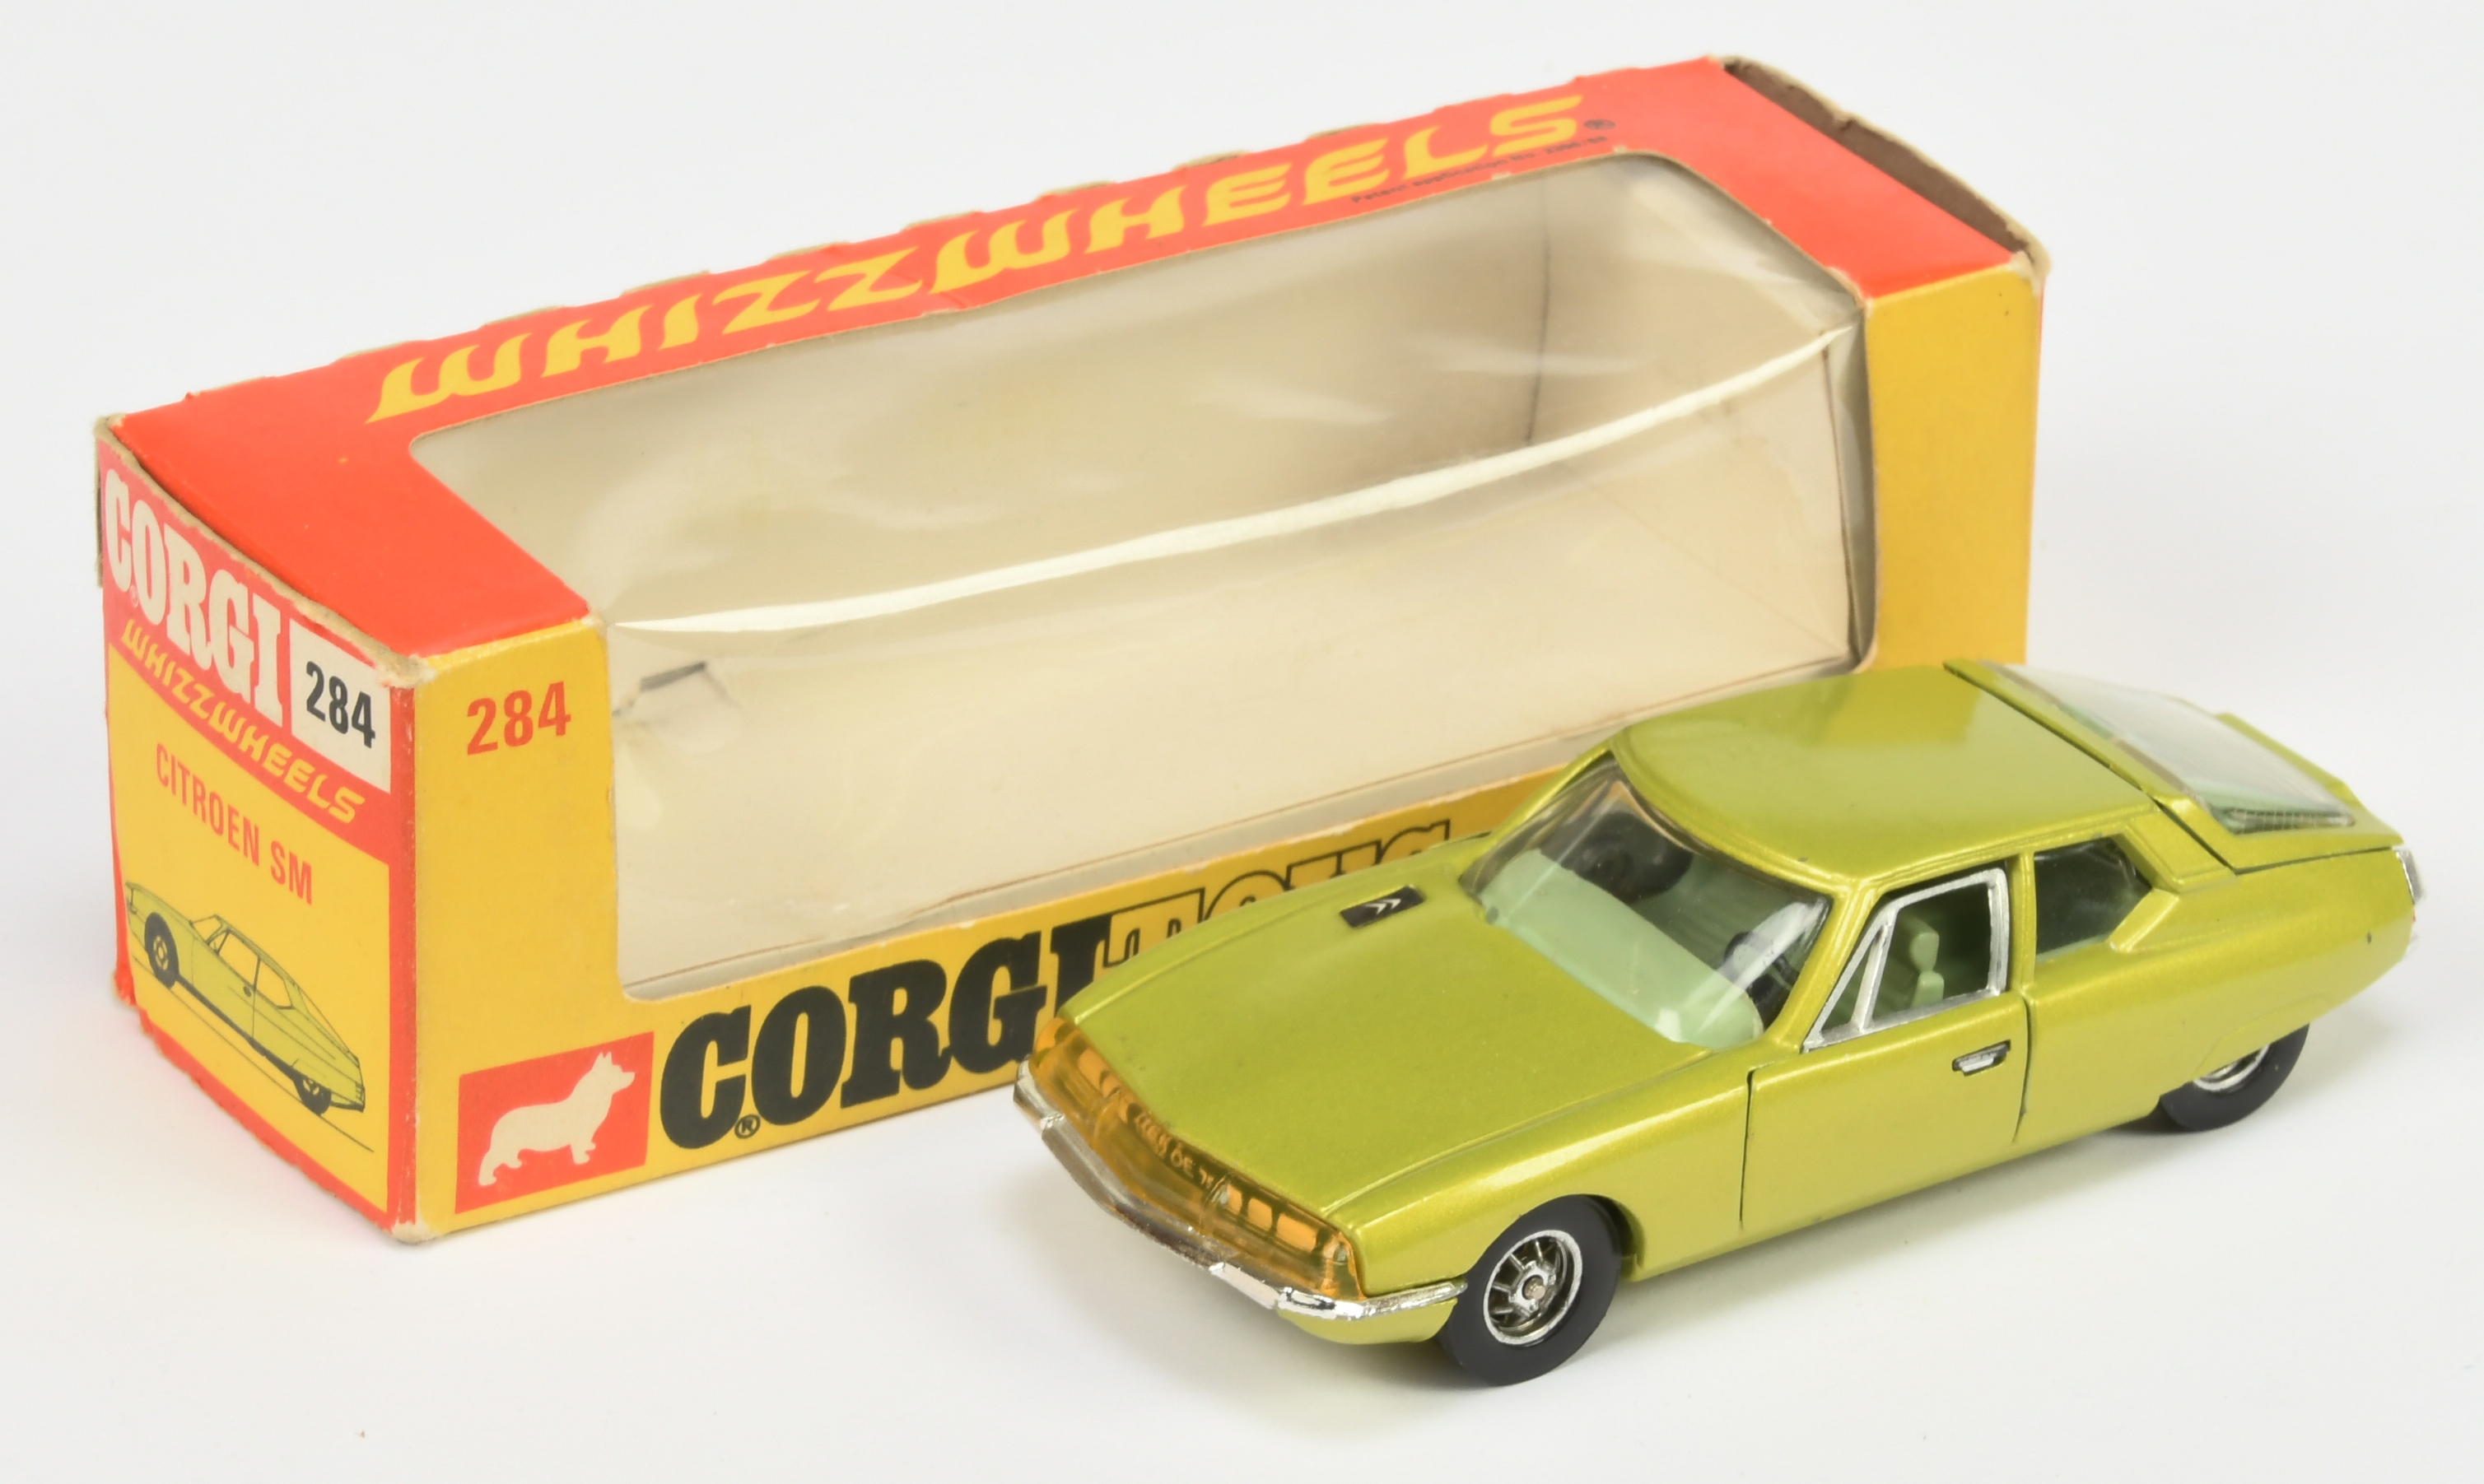 Corgi Toys Whizzwheels 284 Citroen SM - Metallic Lime body, pale green interior, chrome trim, spo...